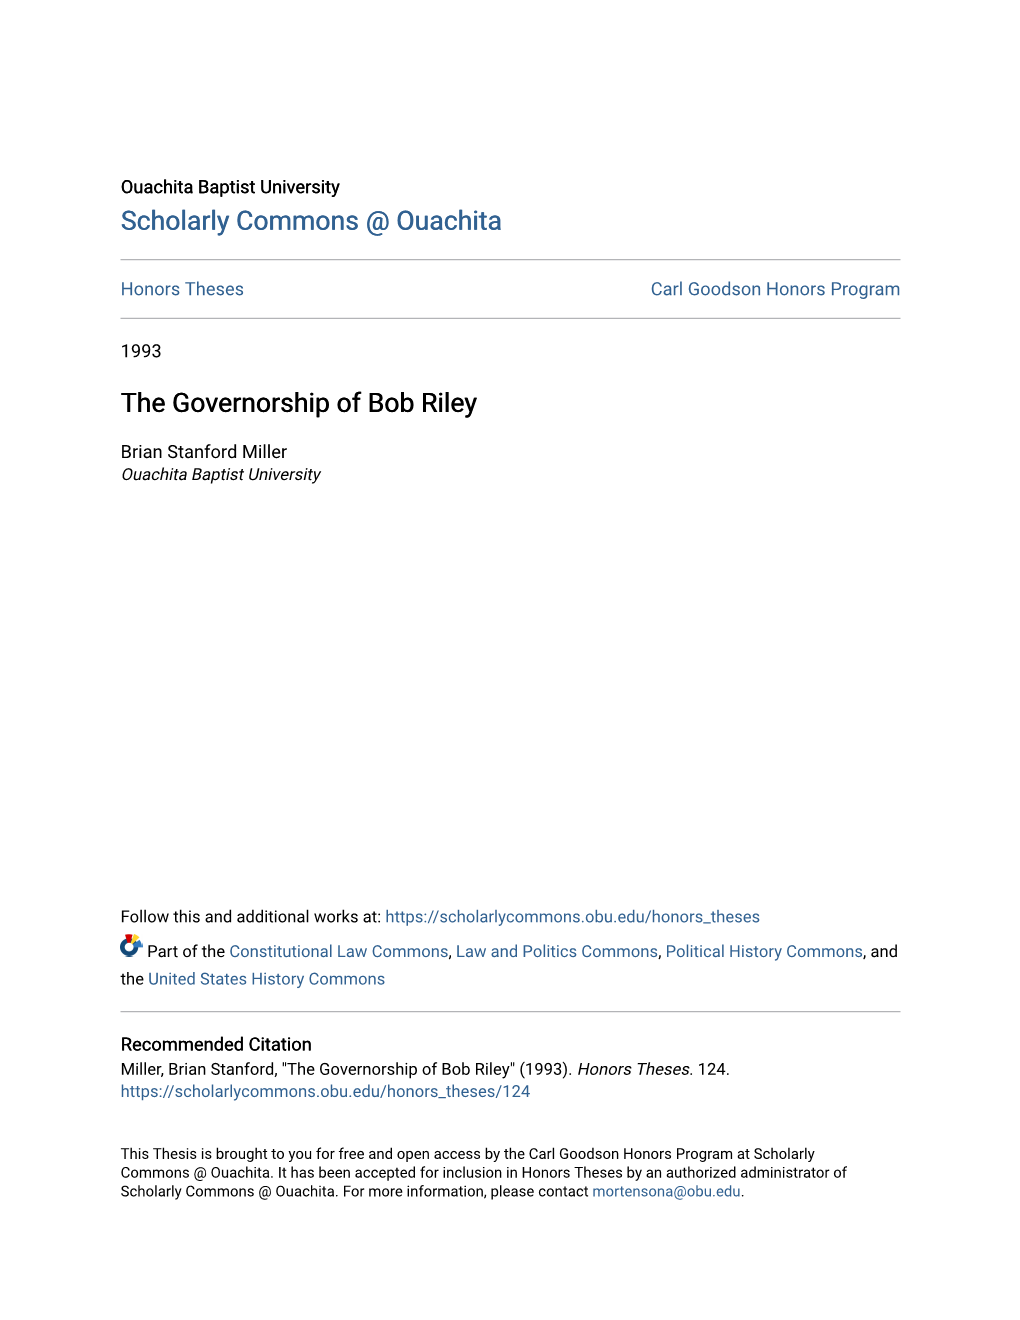 The Governorship of Bob Riley